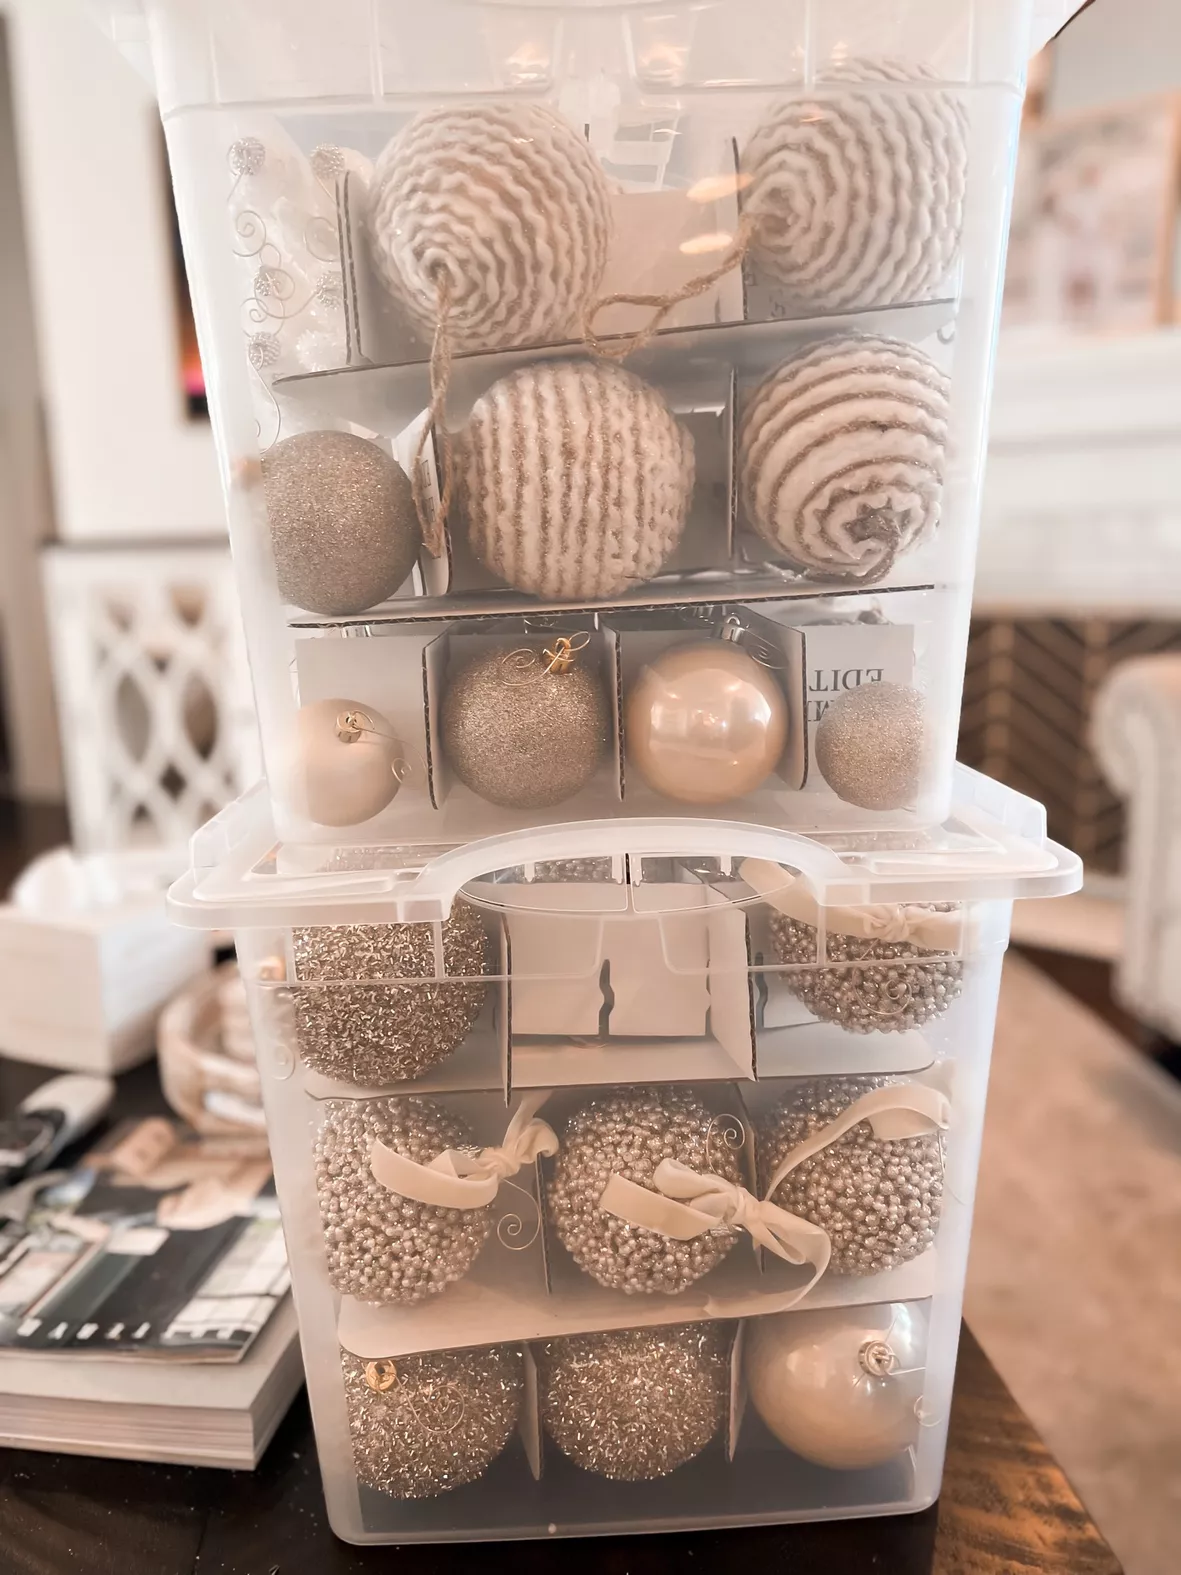  Simplify 64 Count Ornament Storage Box